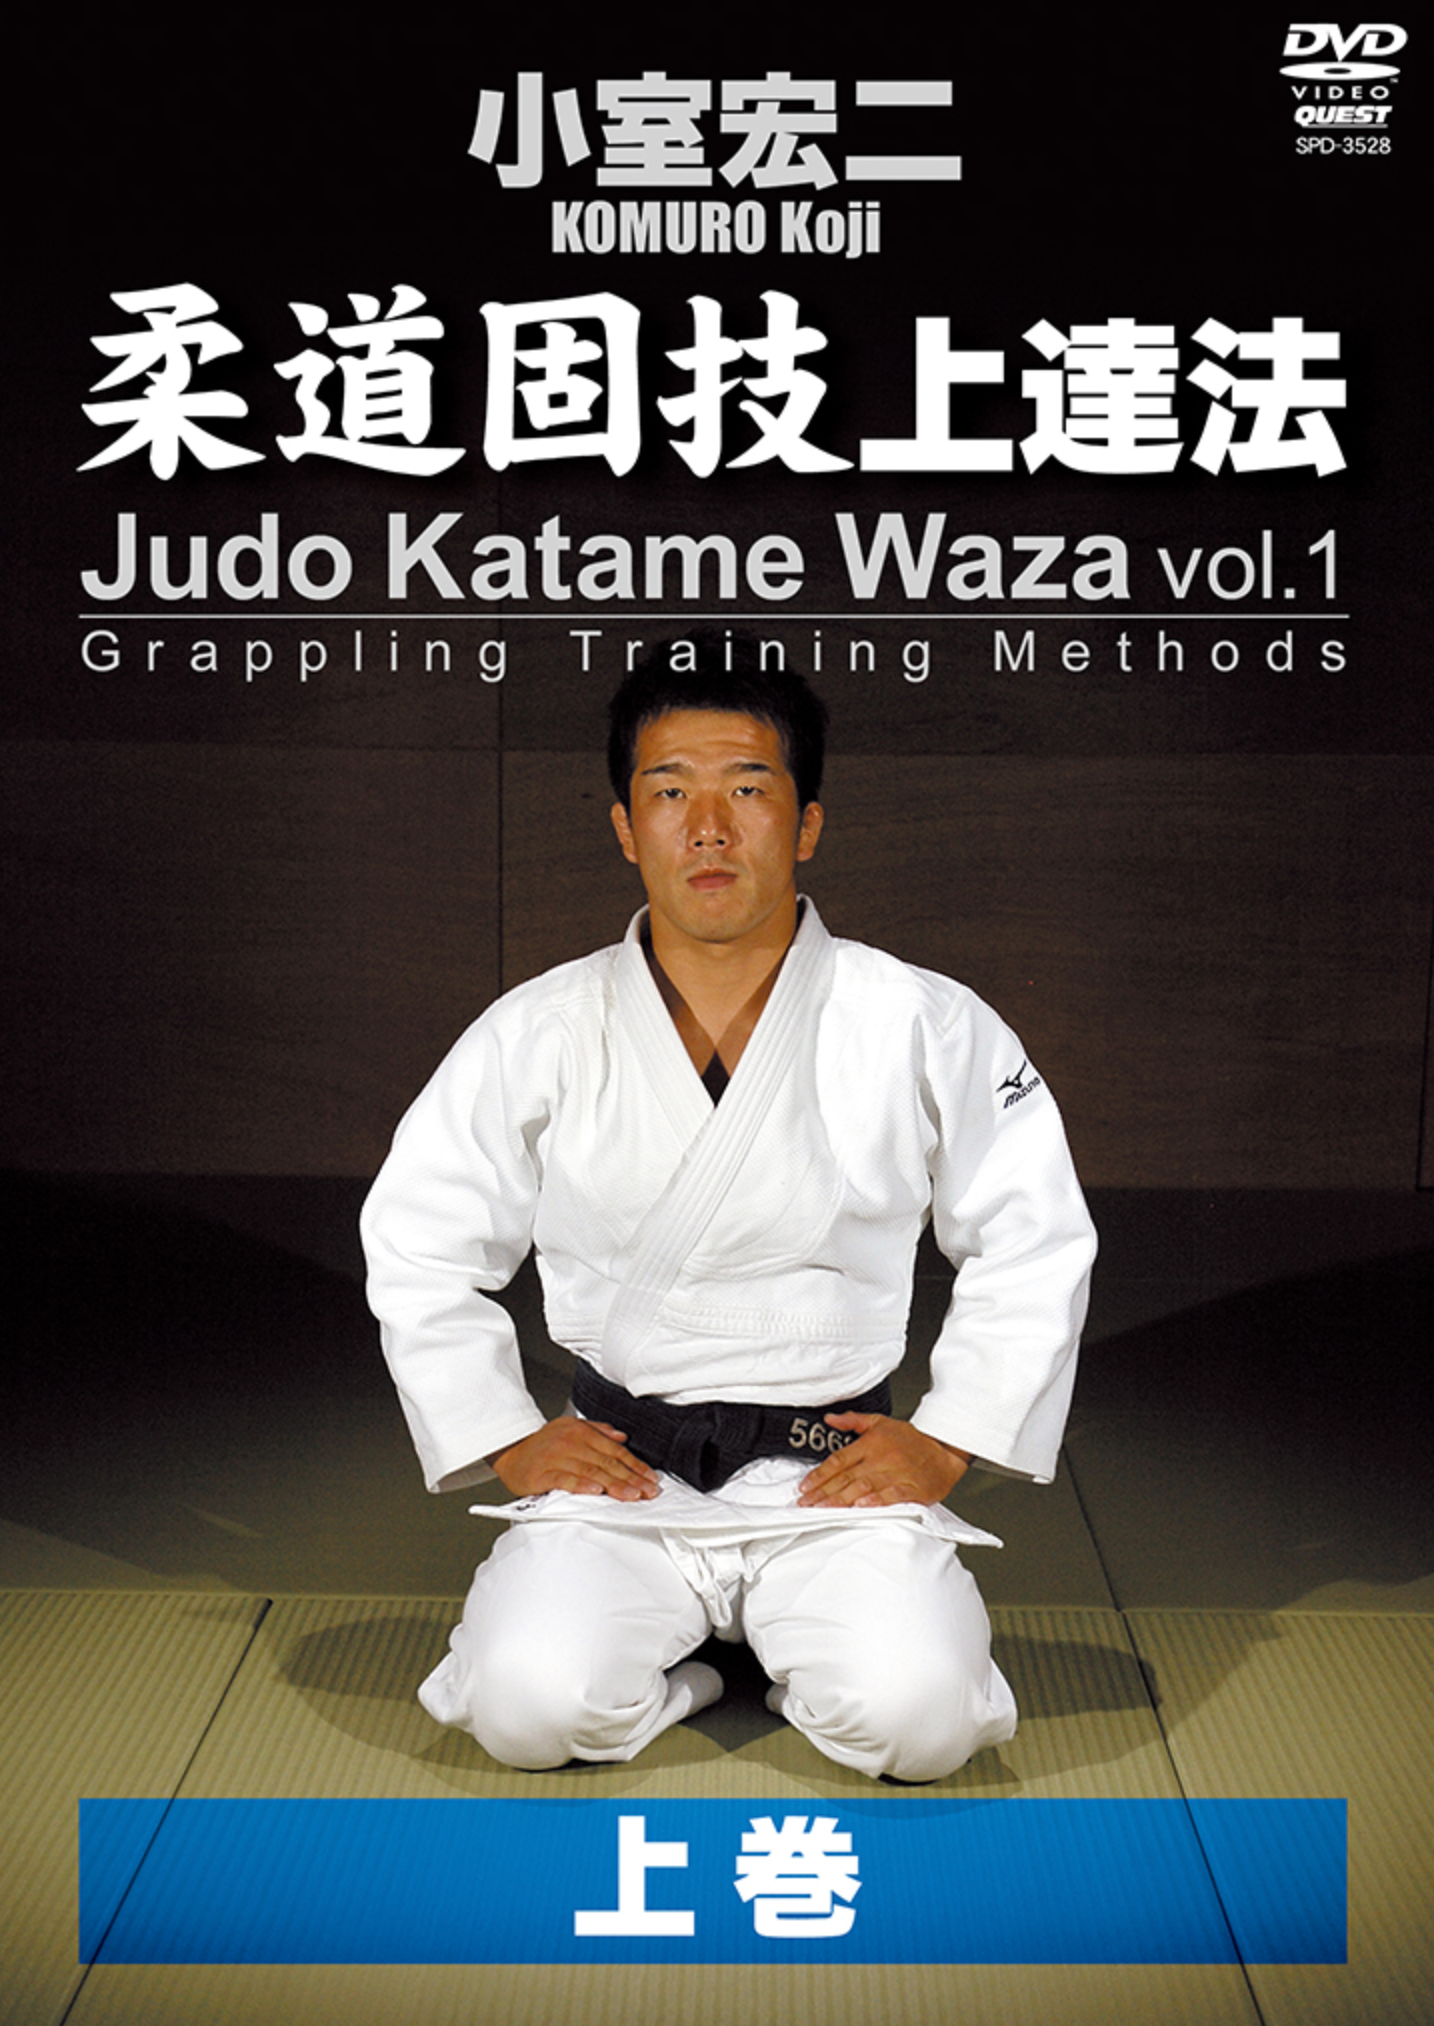 Judo Katame Waza: Grappling Training Methods DVD 1 with Koji Komuro - Budovideos Inc